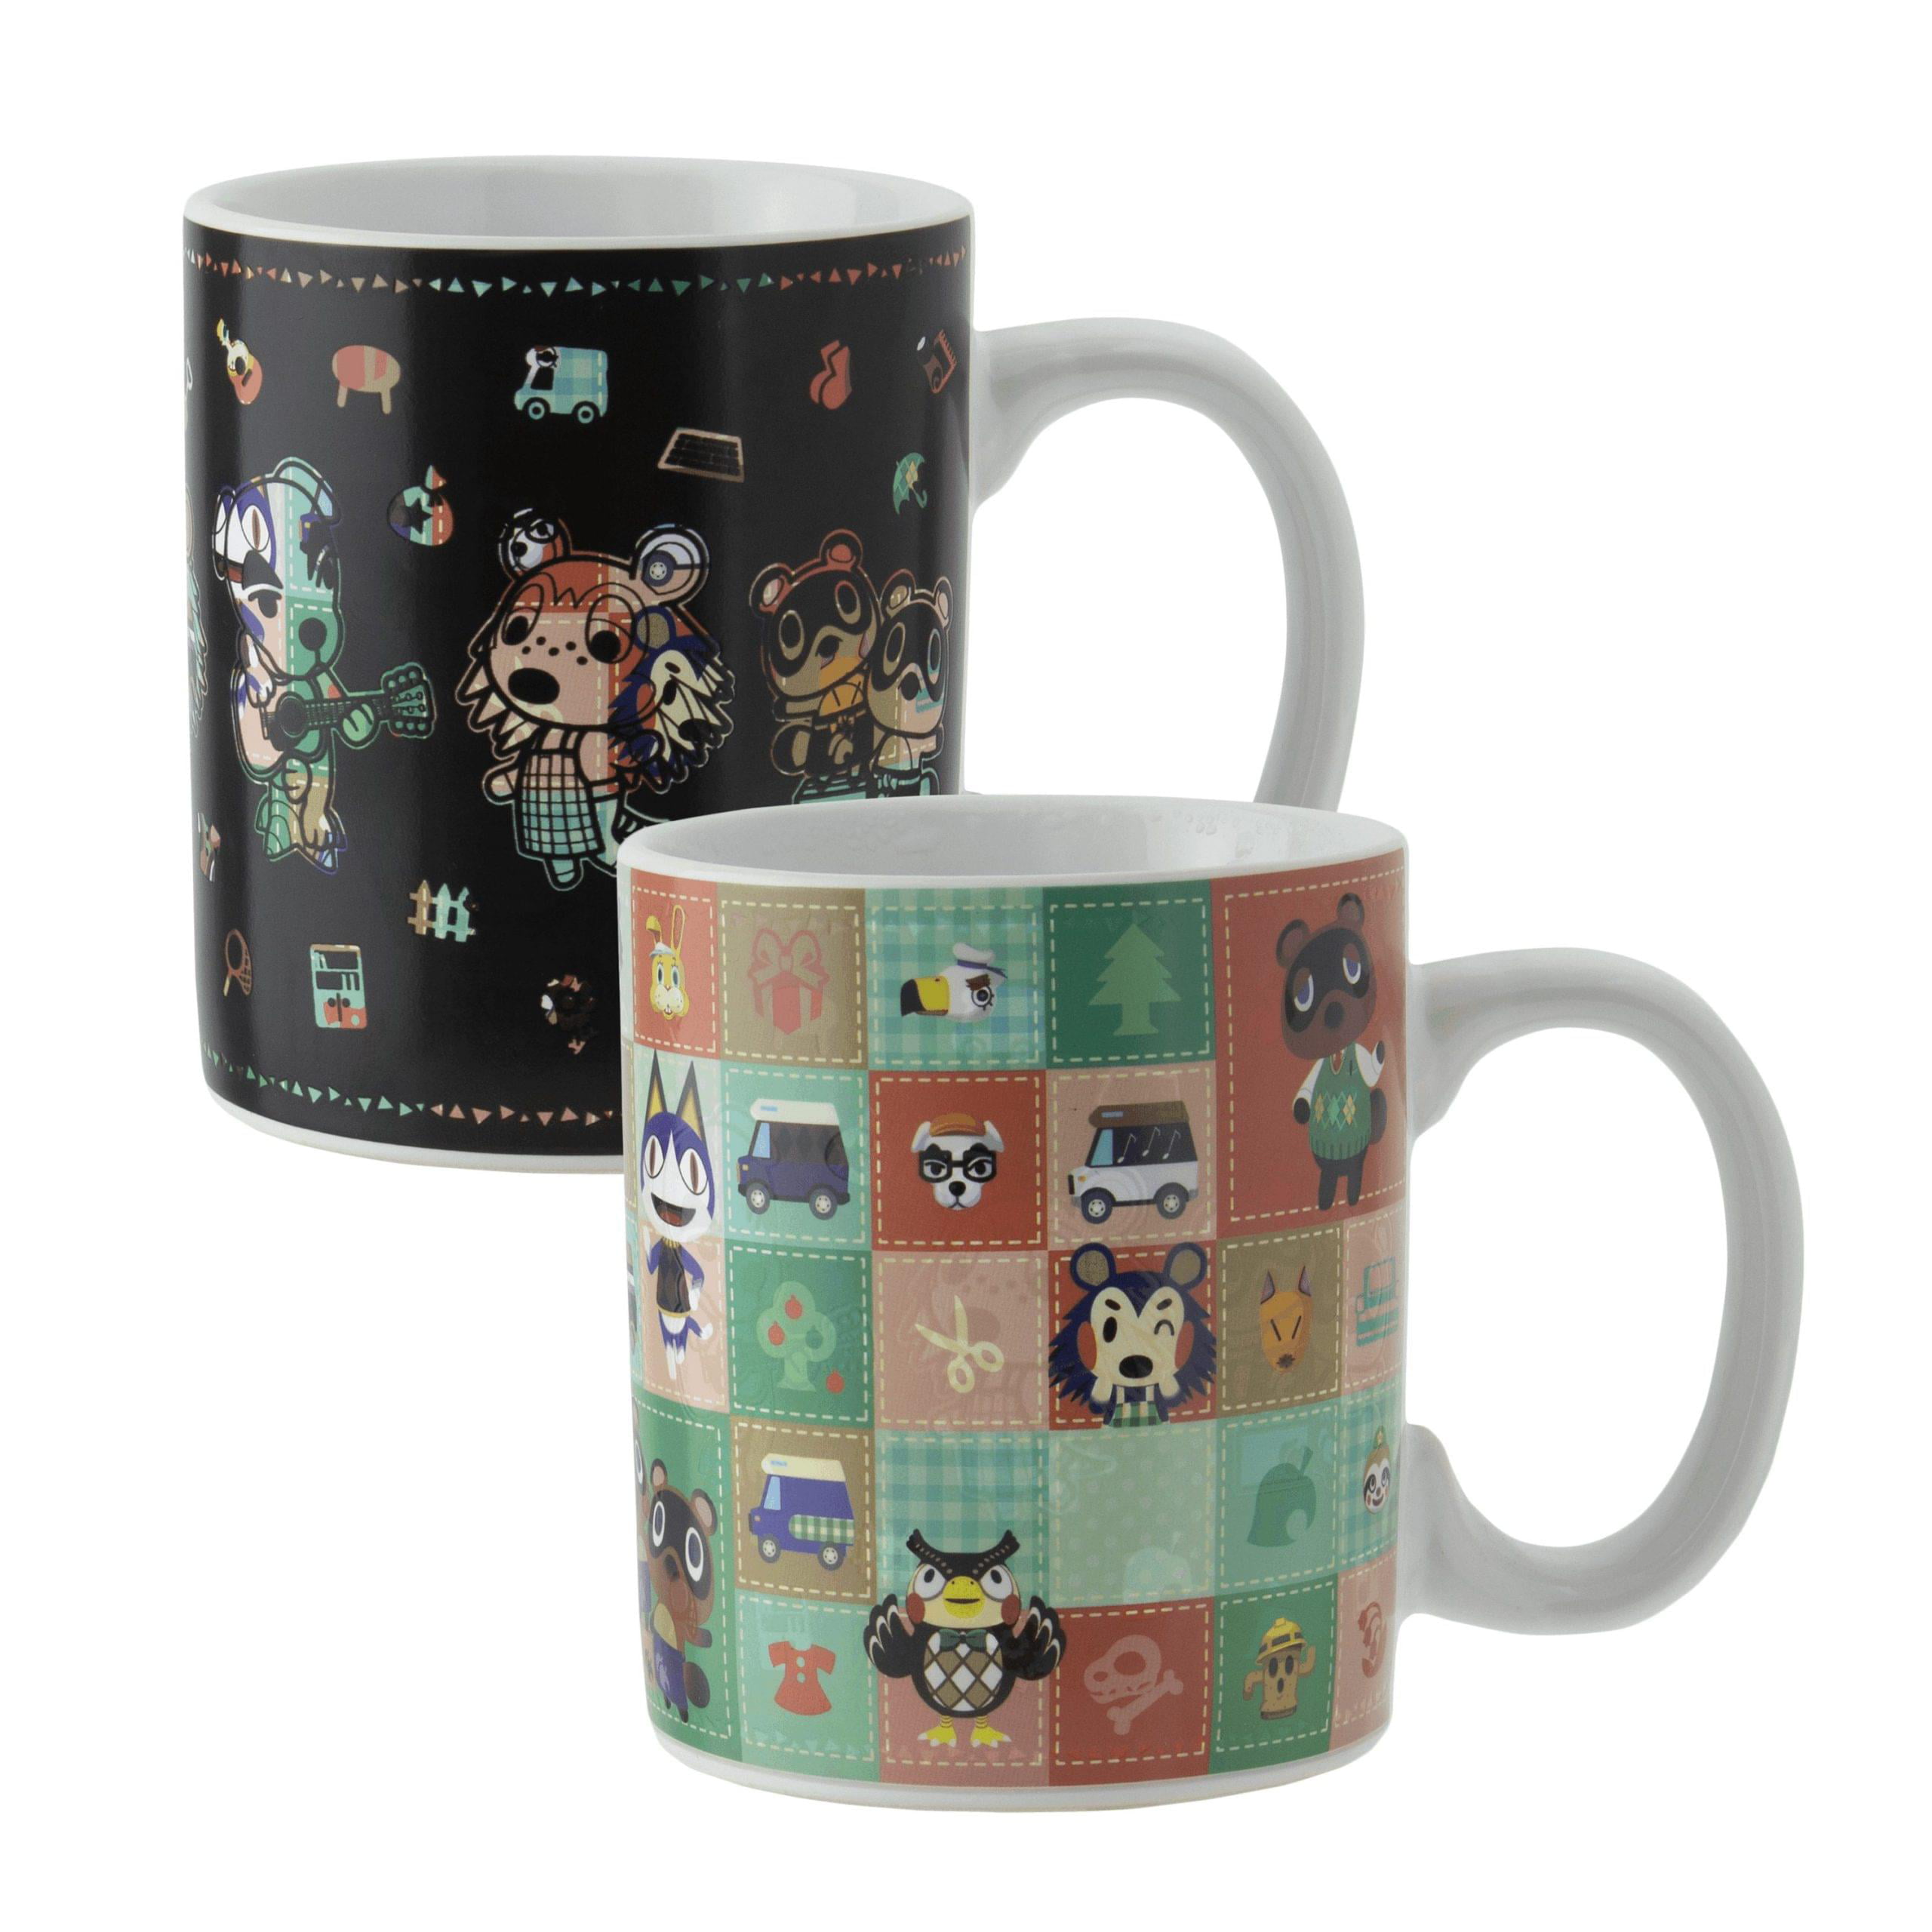  Animal Crossing Mug, Figures, Melinda, Tom Nook, 315 ml,  Nintendo Ceramic, White 259736 Colourful Standard : Home & Kitchen